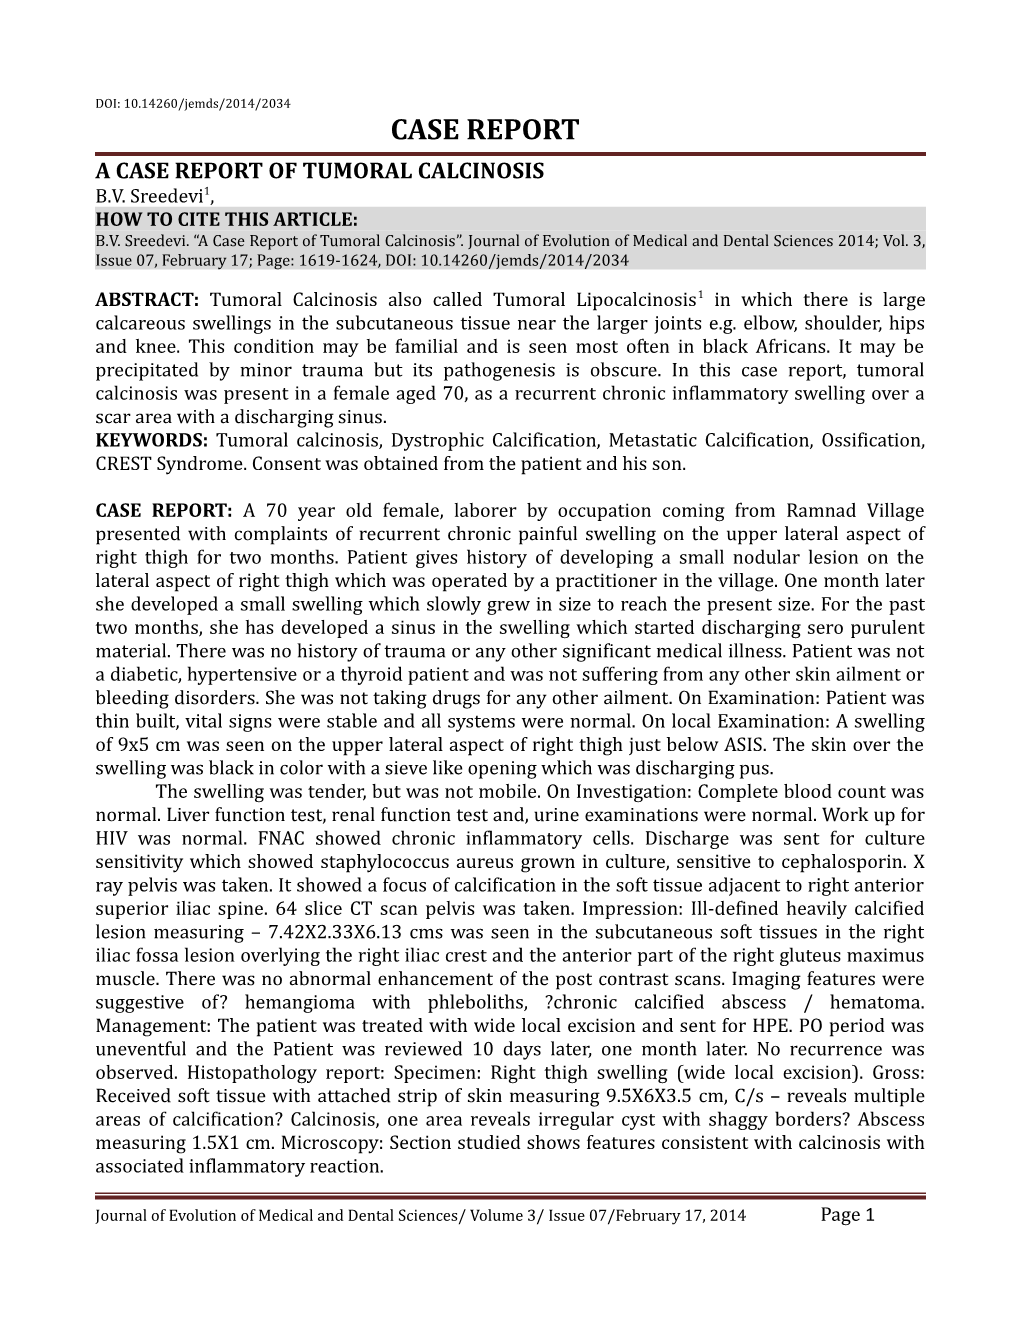 Acase Report of Tumoral Calcinosis